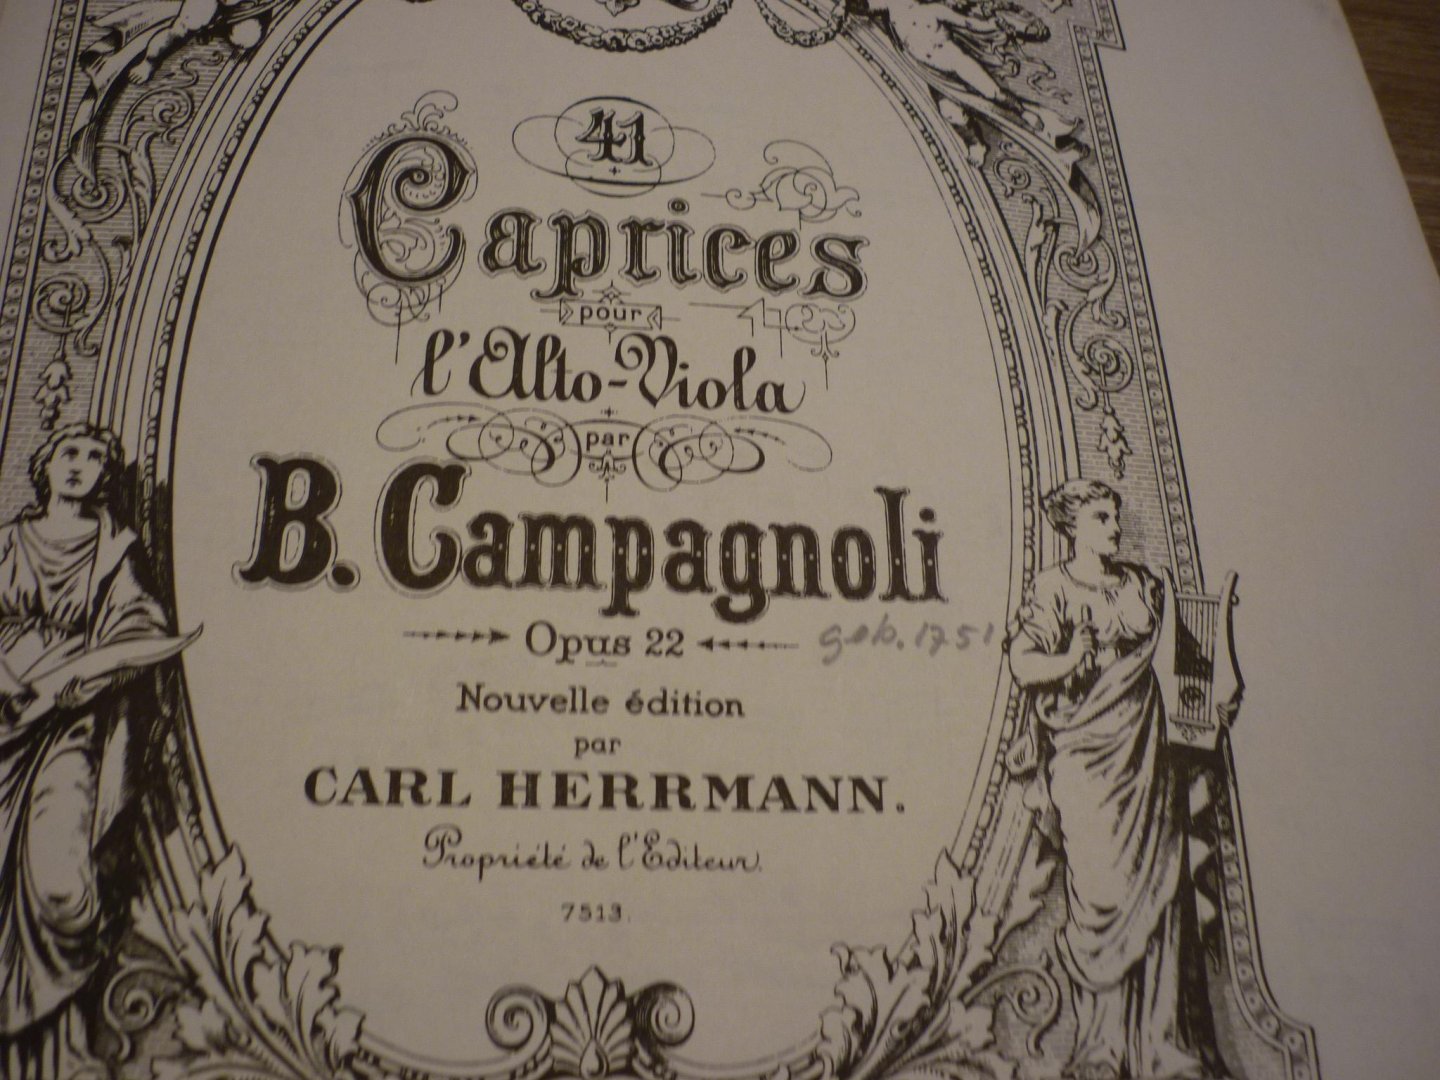 Campagnoli; Bartolomeo (1751–1827) - 41 Capricen op. 22